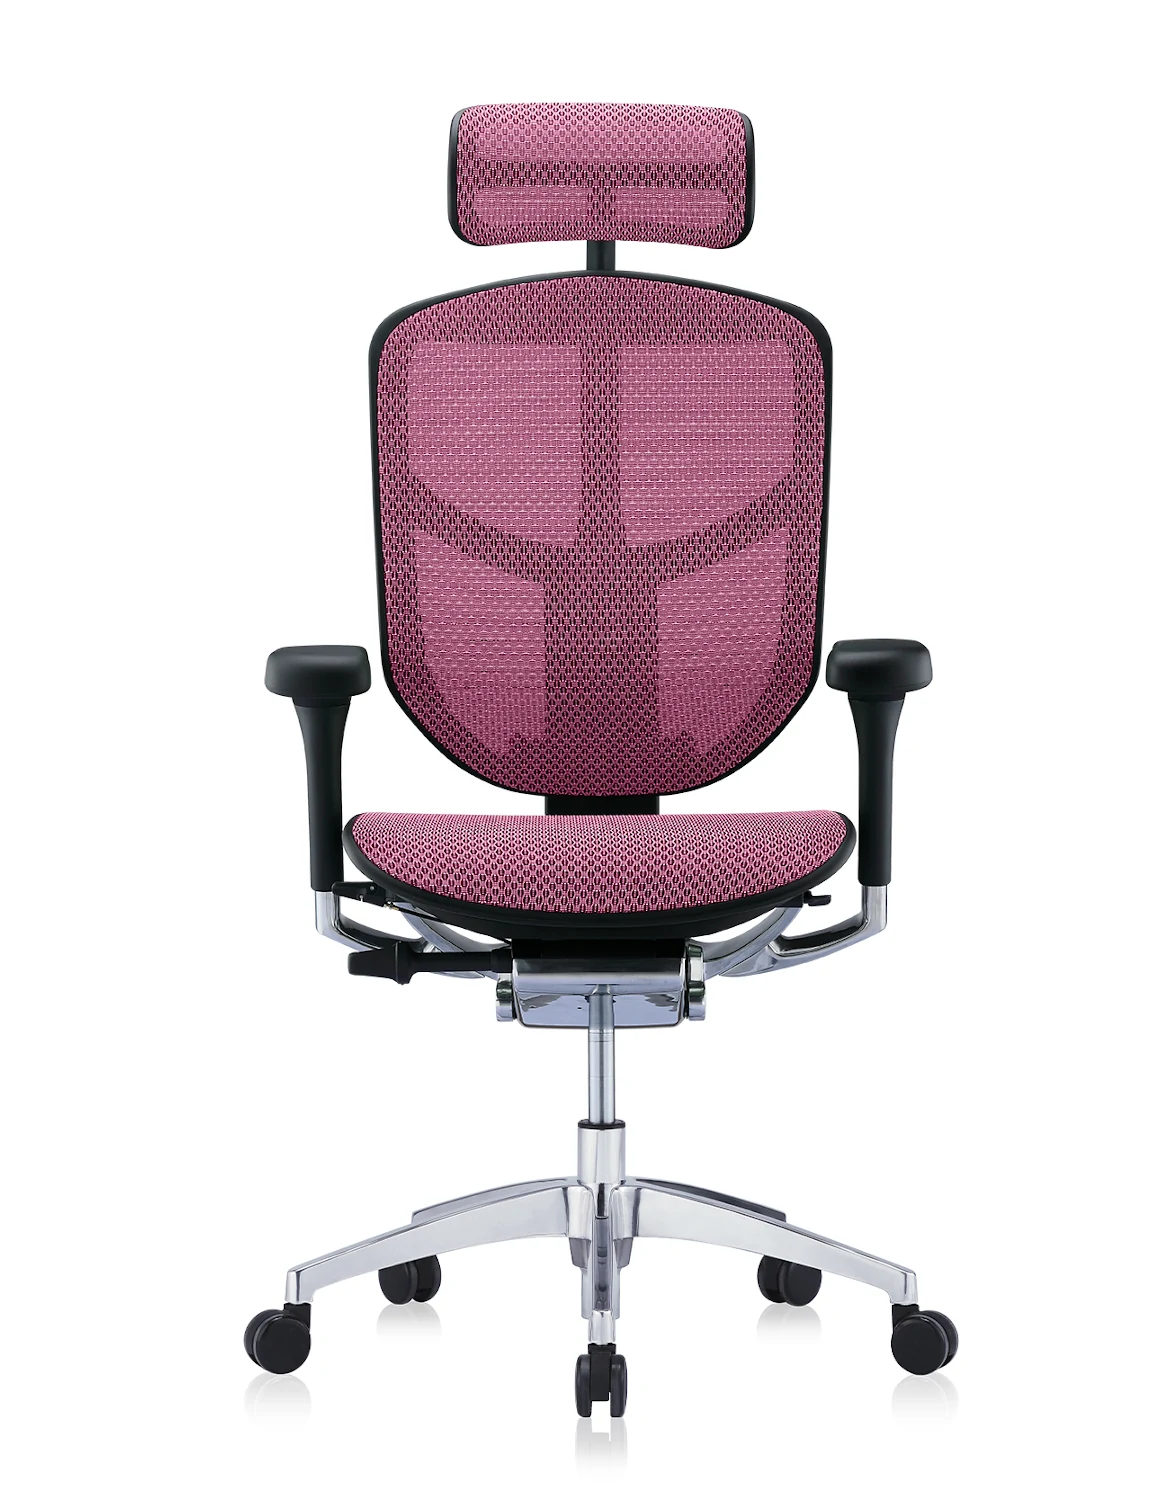 Enjoy Elite Ergonomic Office Chair G2